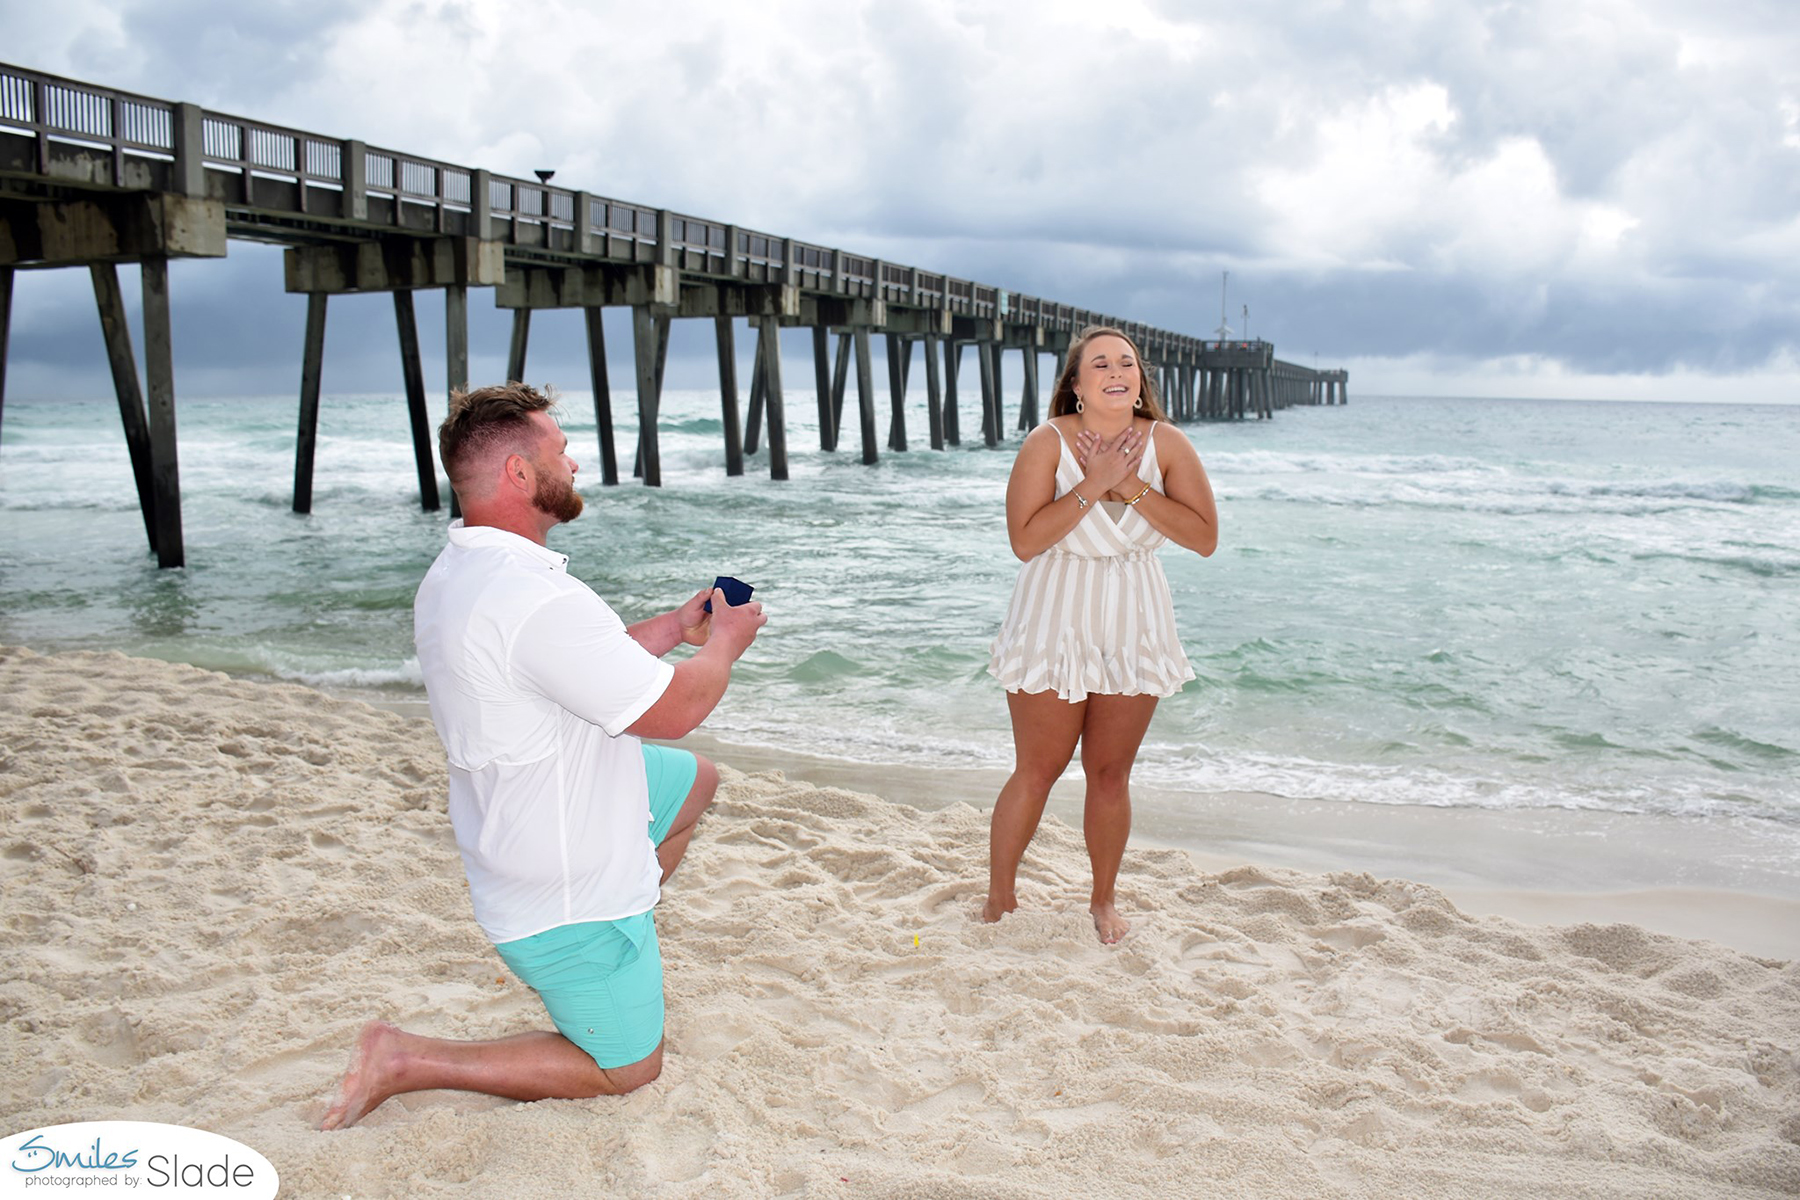 Panama City Beach photographer capture surprise proposal at the pier.